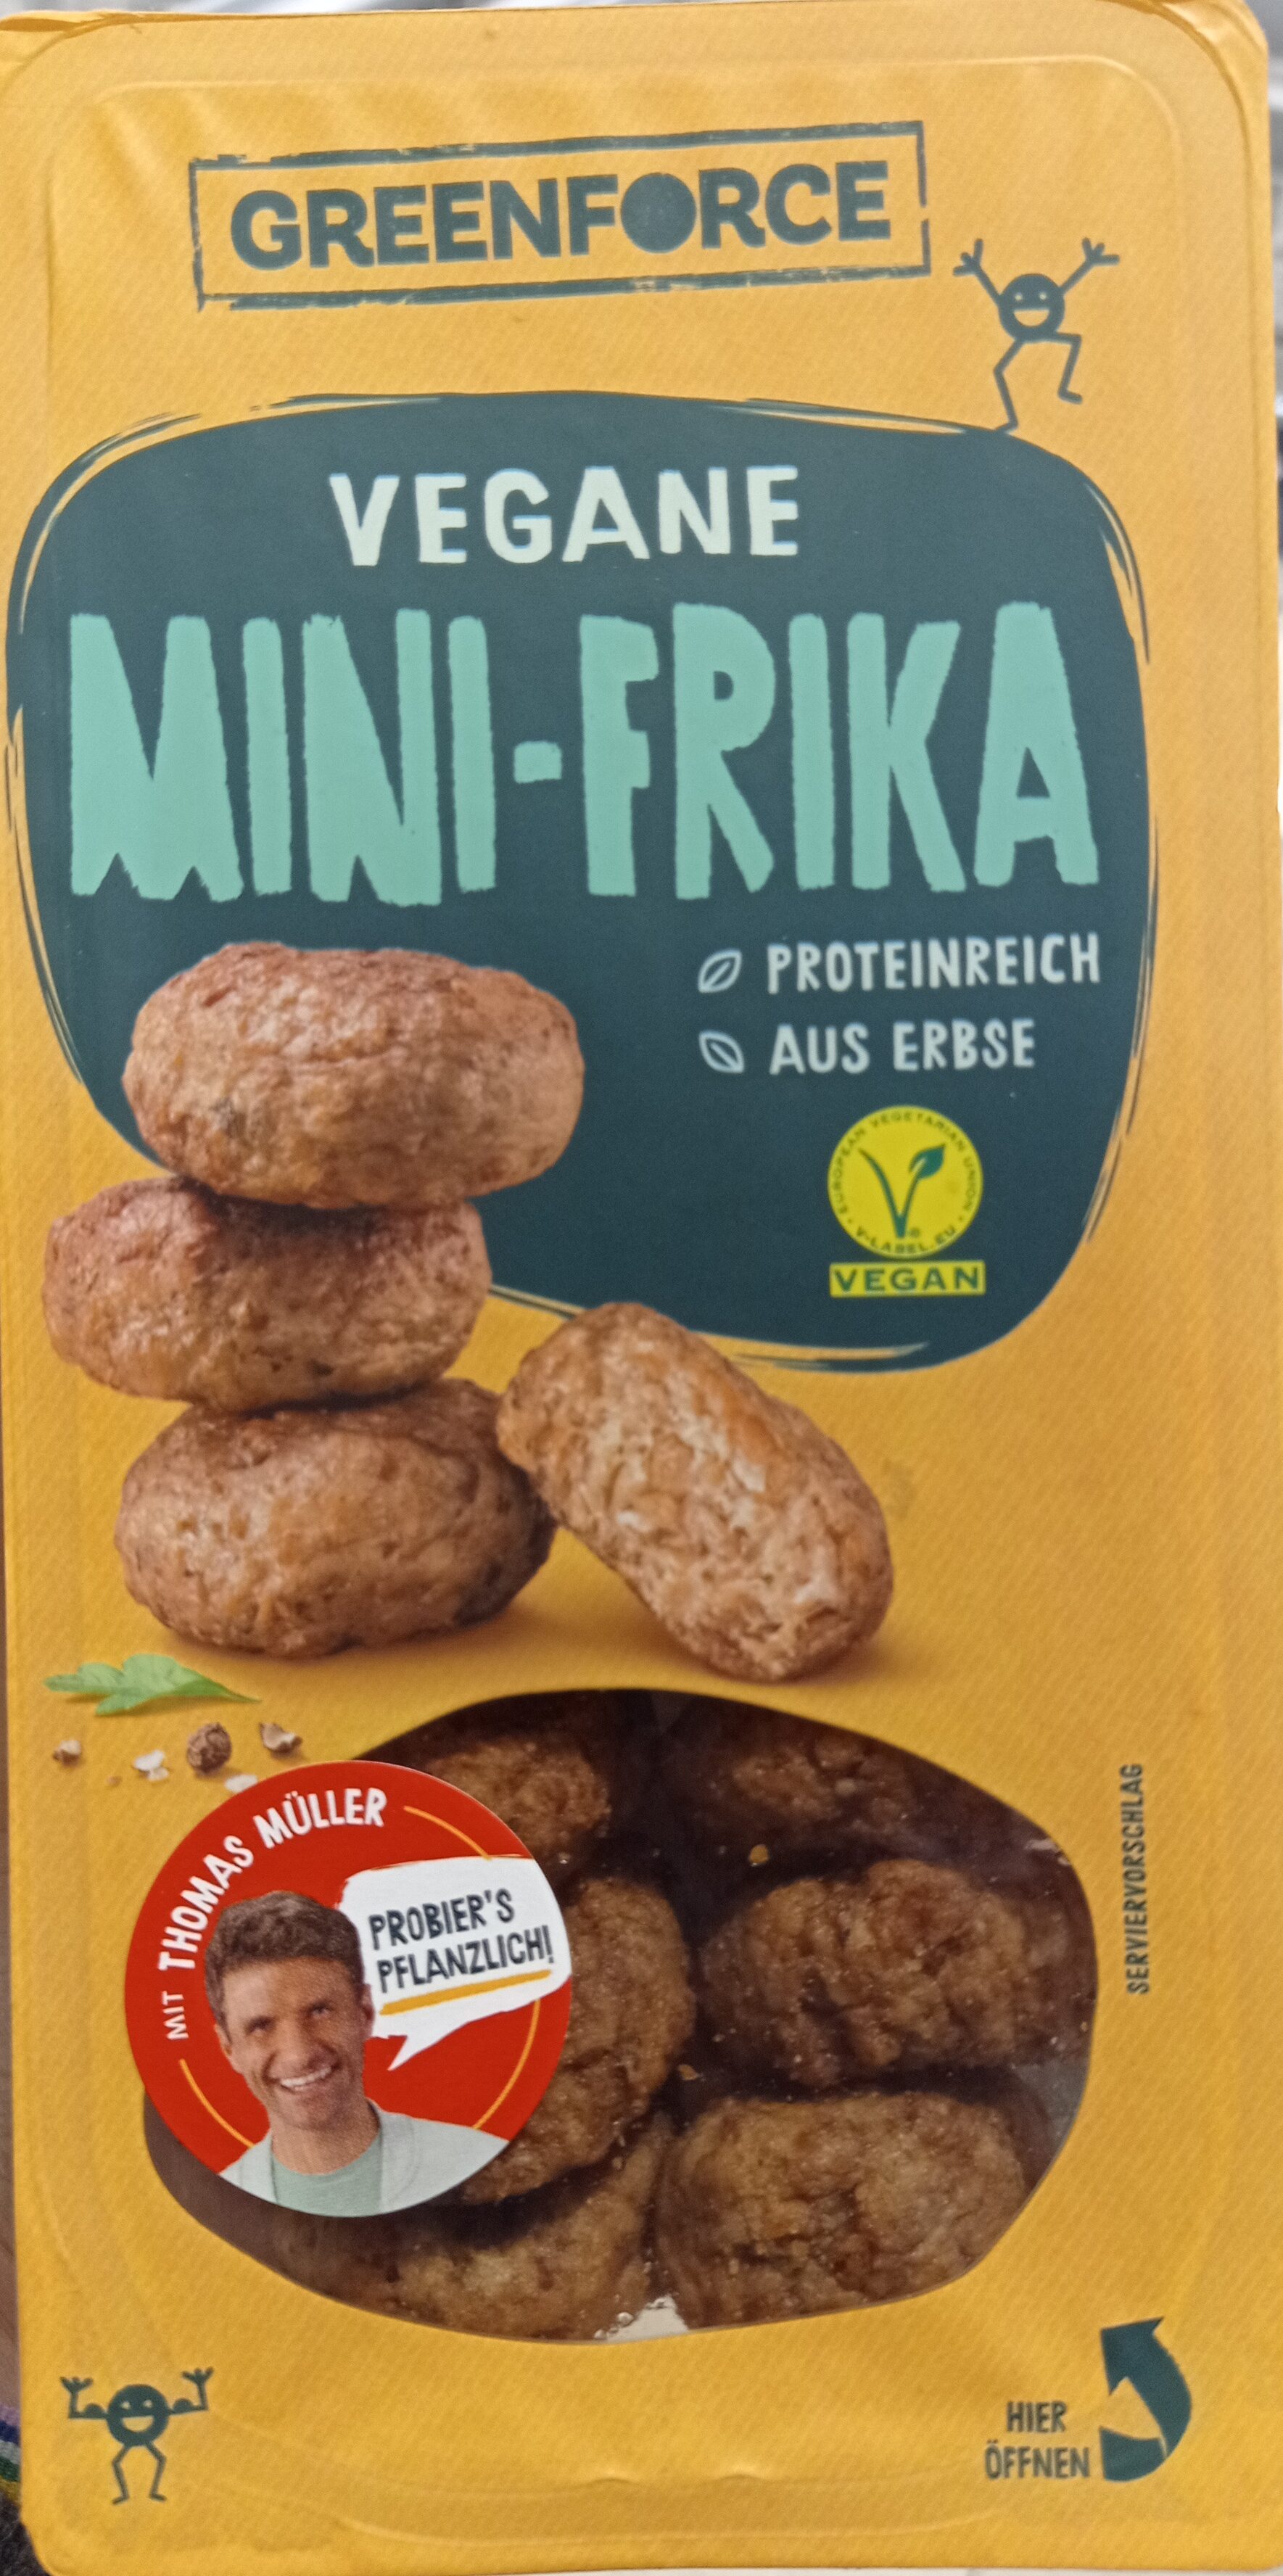 Vegane Mini-Frika - Produkt